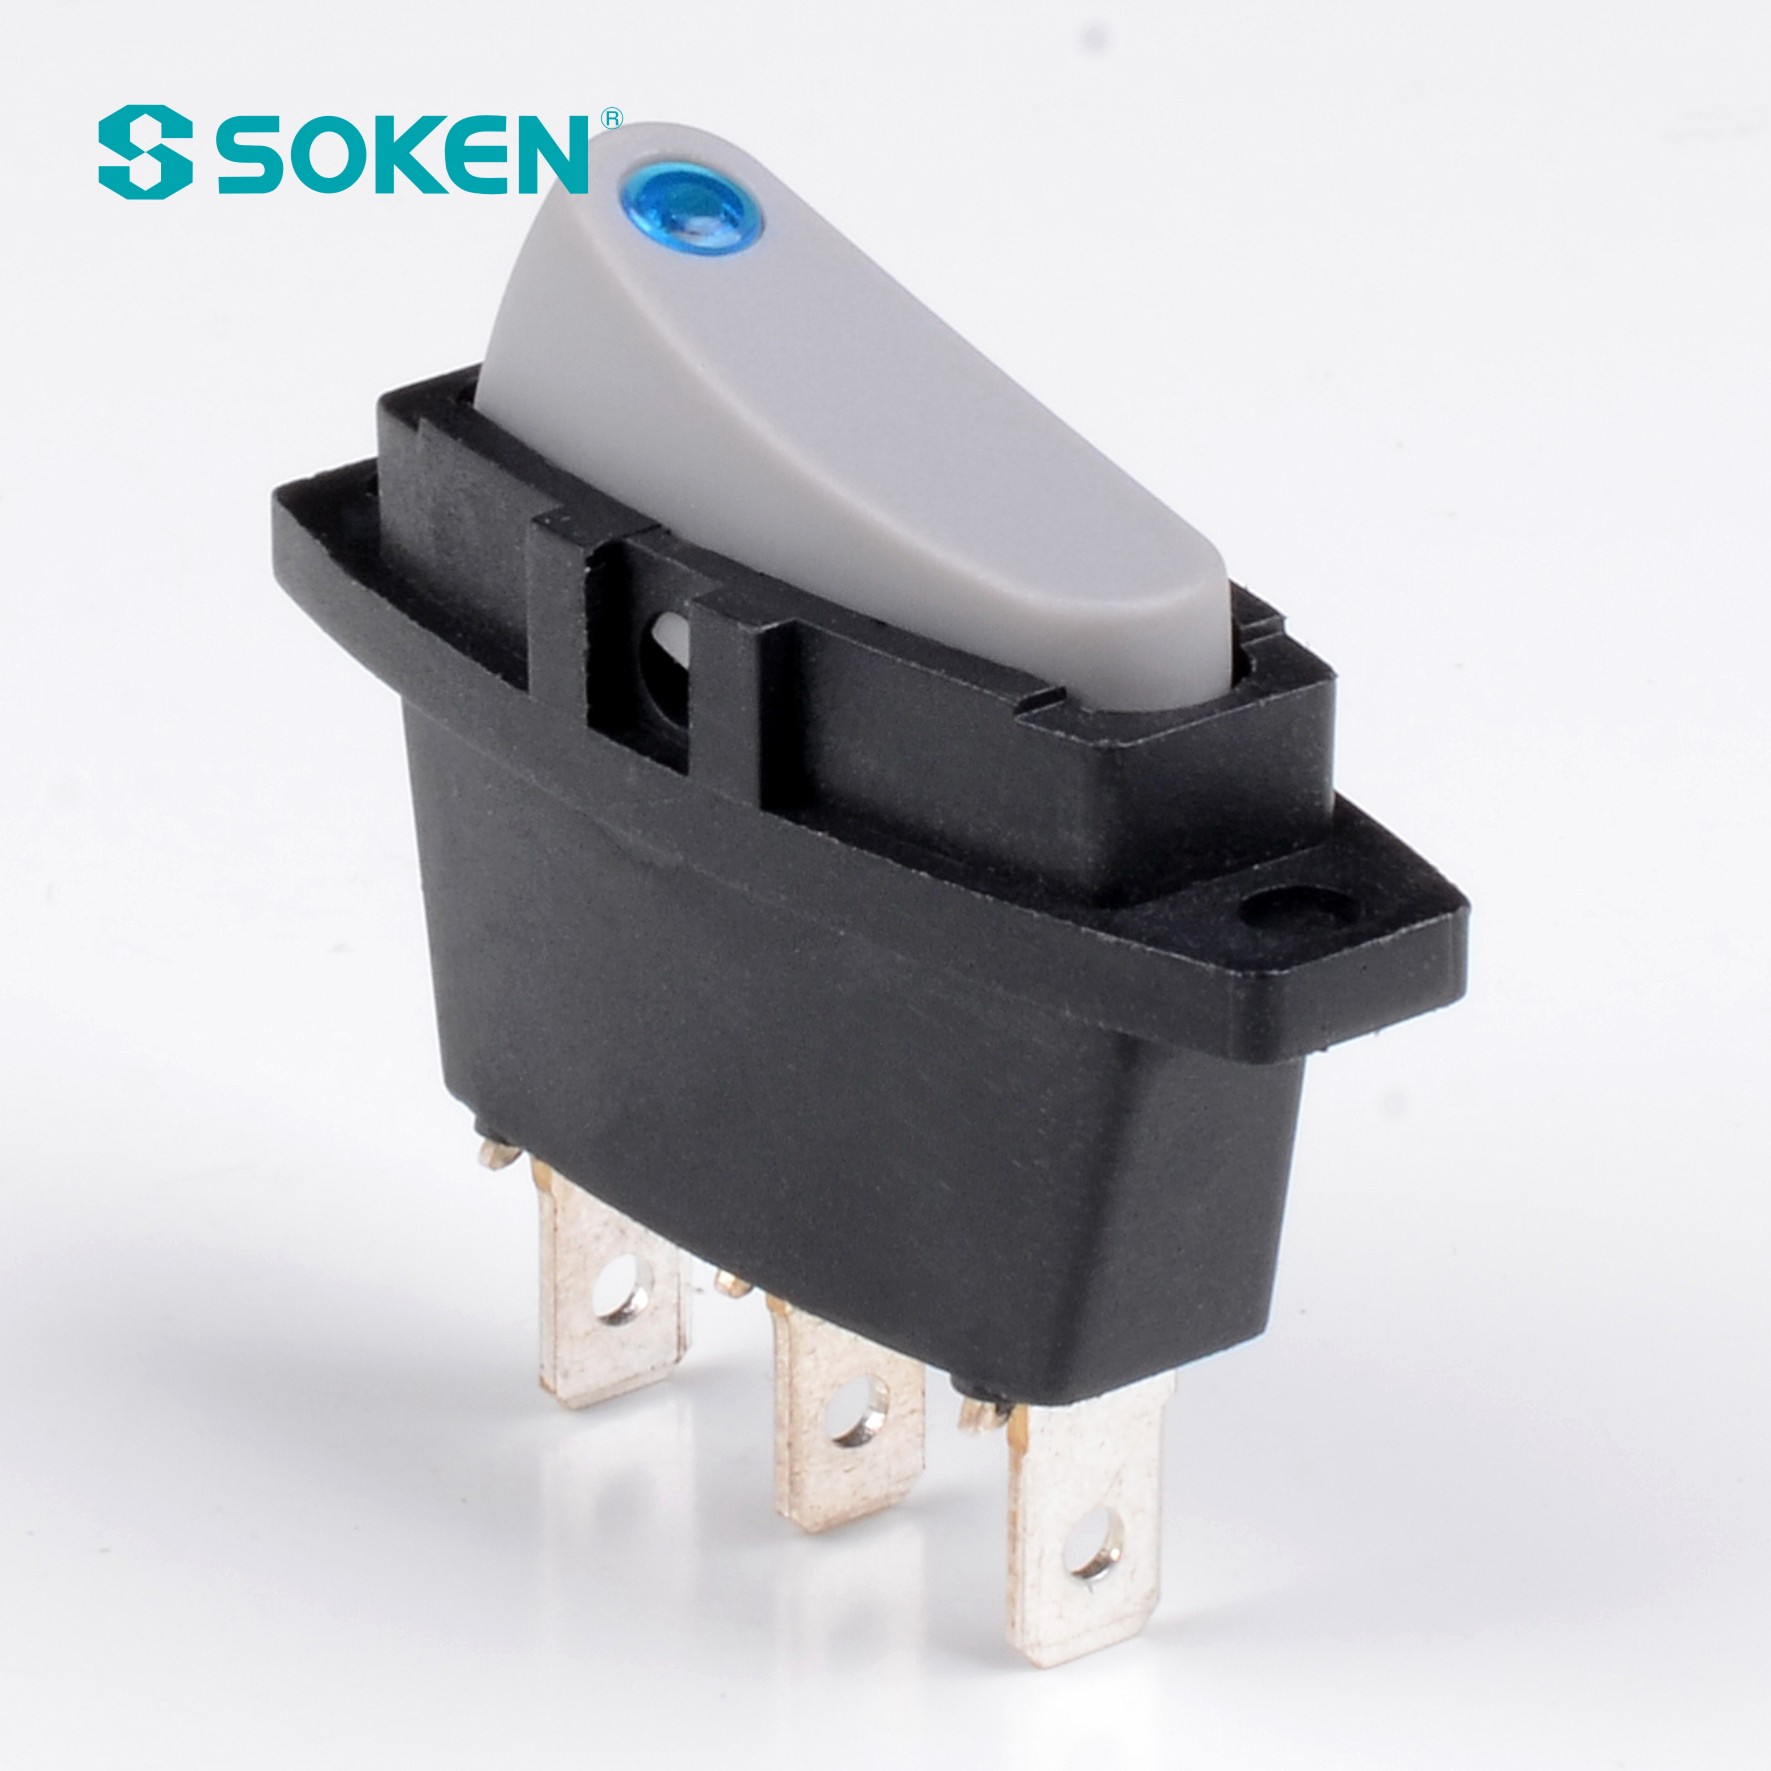 Soken Rk1-36 1X1n on off Illuminated Rocker Switch